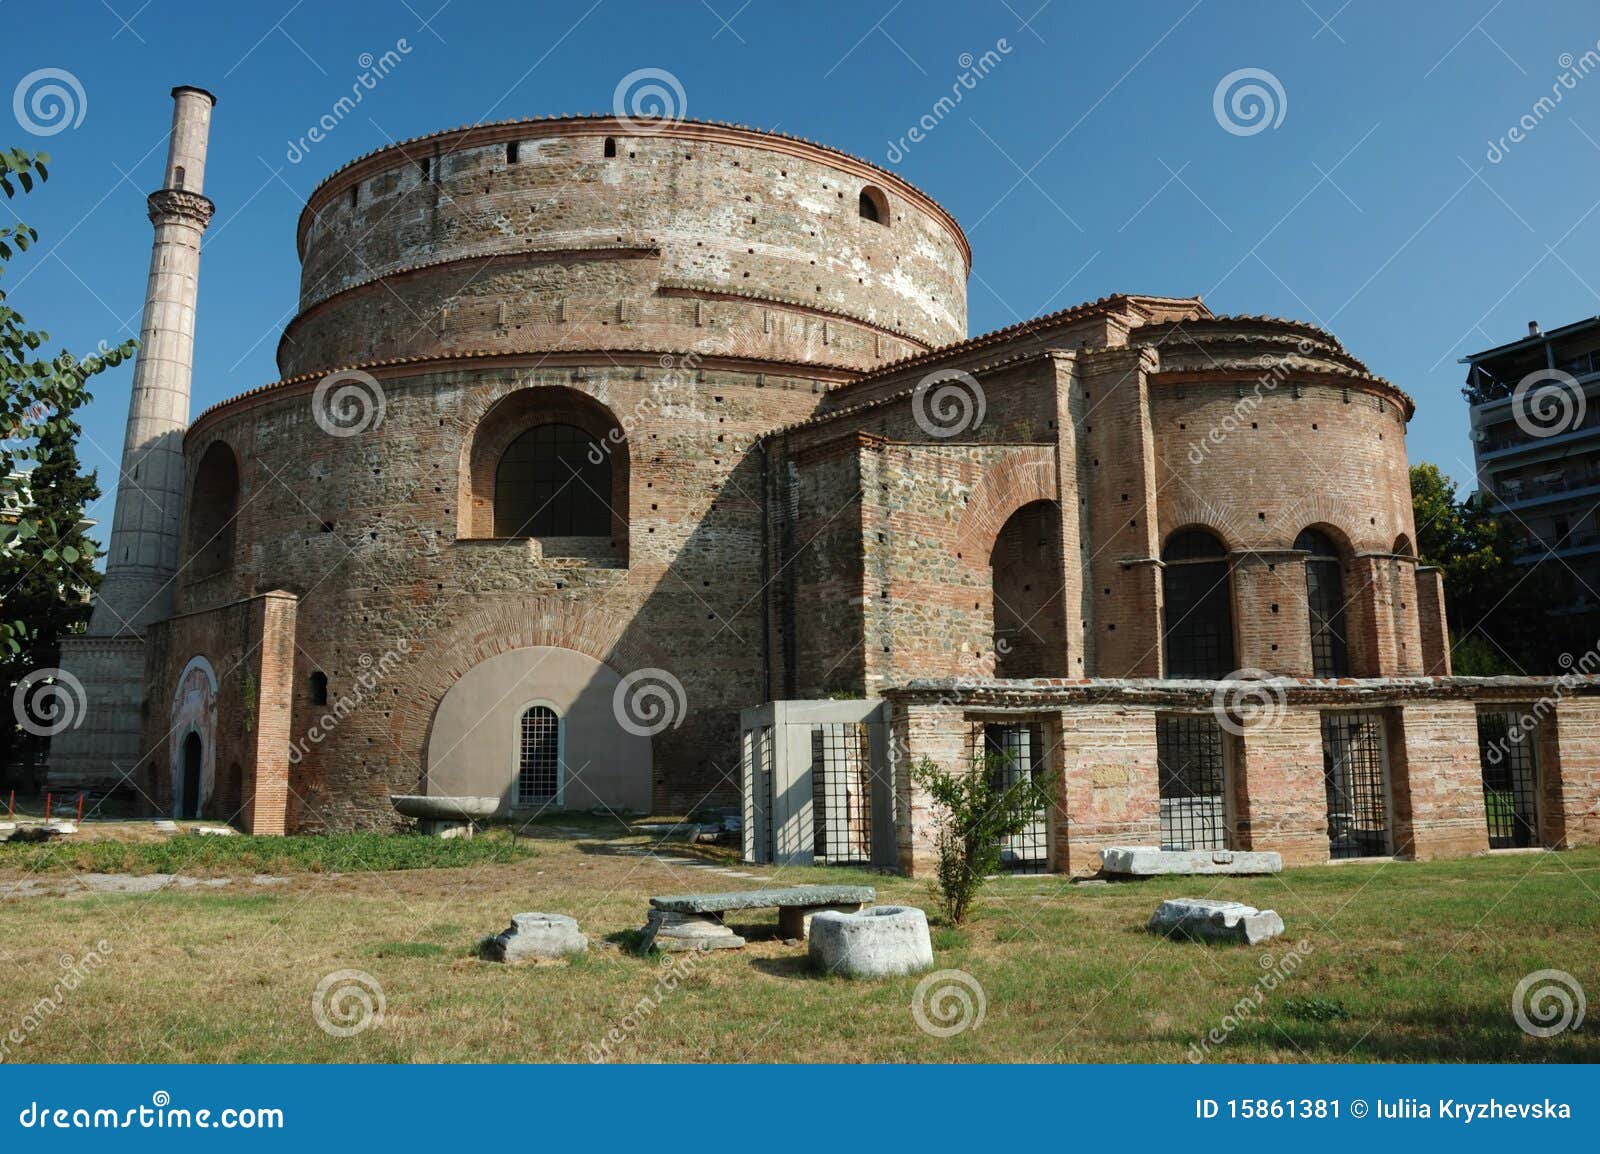 galerius rotunda of st.george in thessaloniki